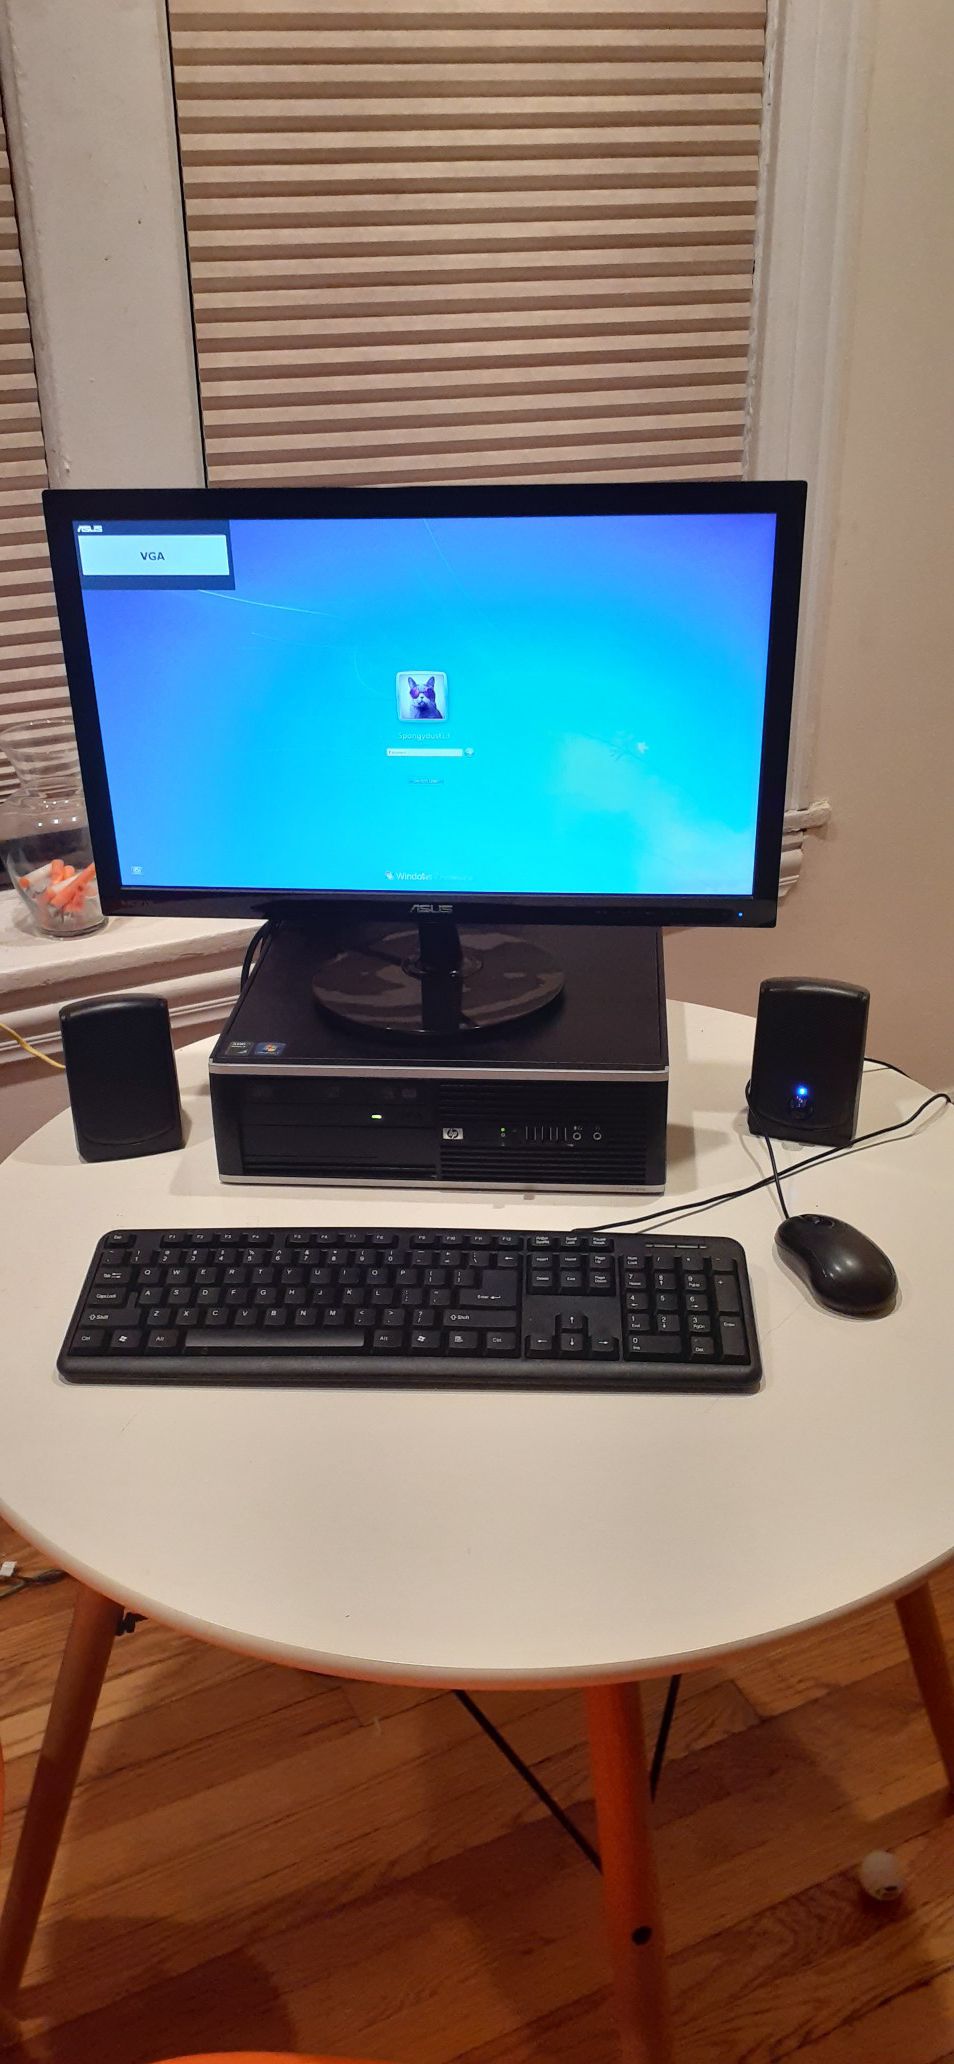 Dell Windows 7 desktop computer